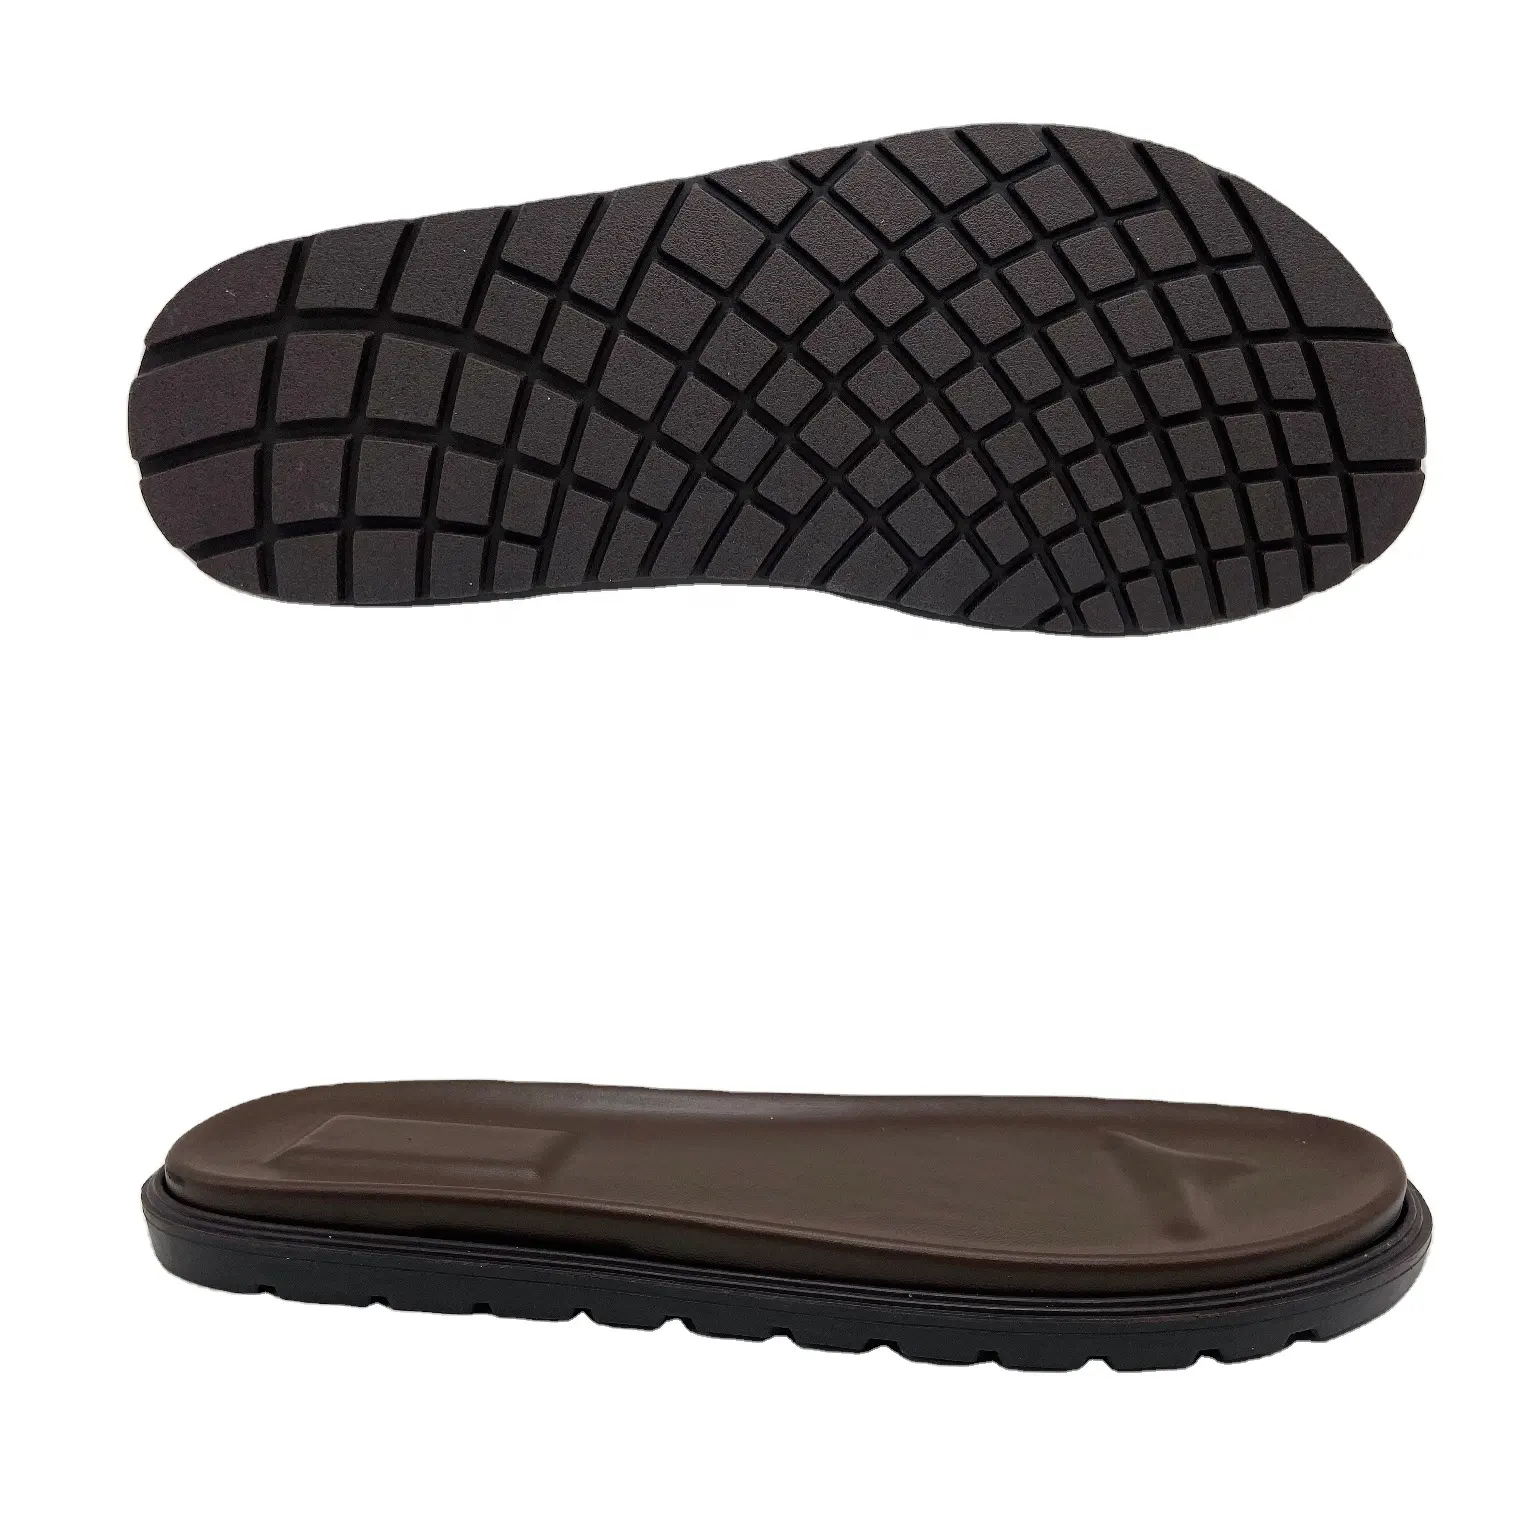 Hotsale Beach Sandal Outsole Men PU and Rubber Indoor Slipper Sole